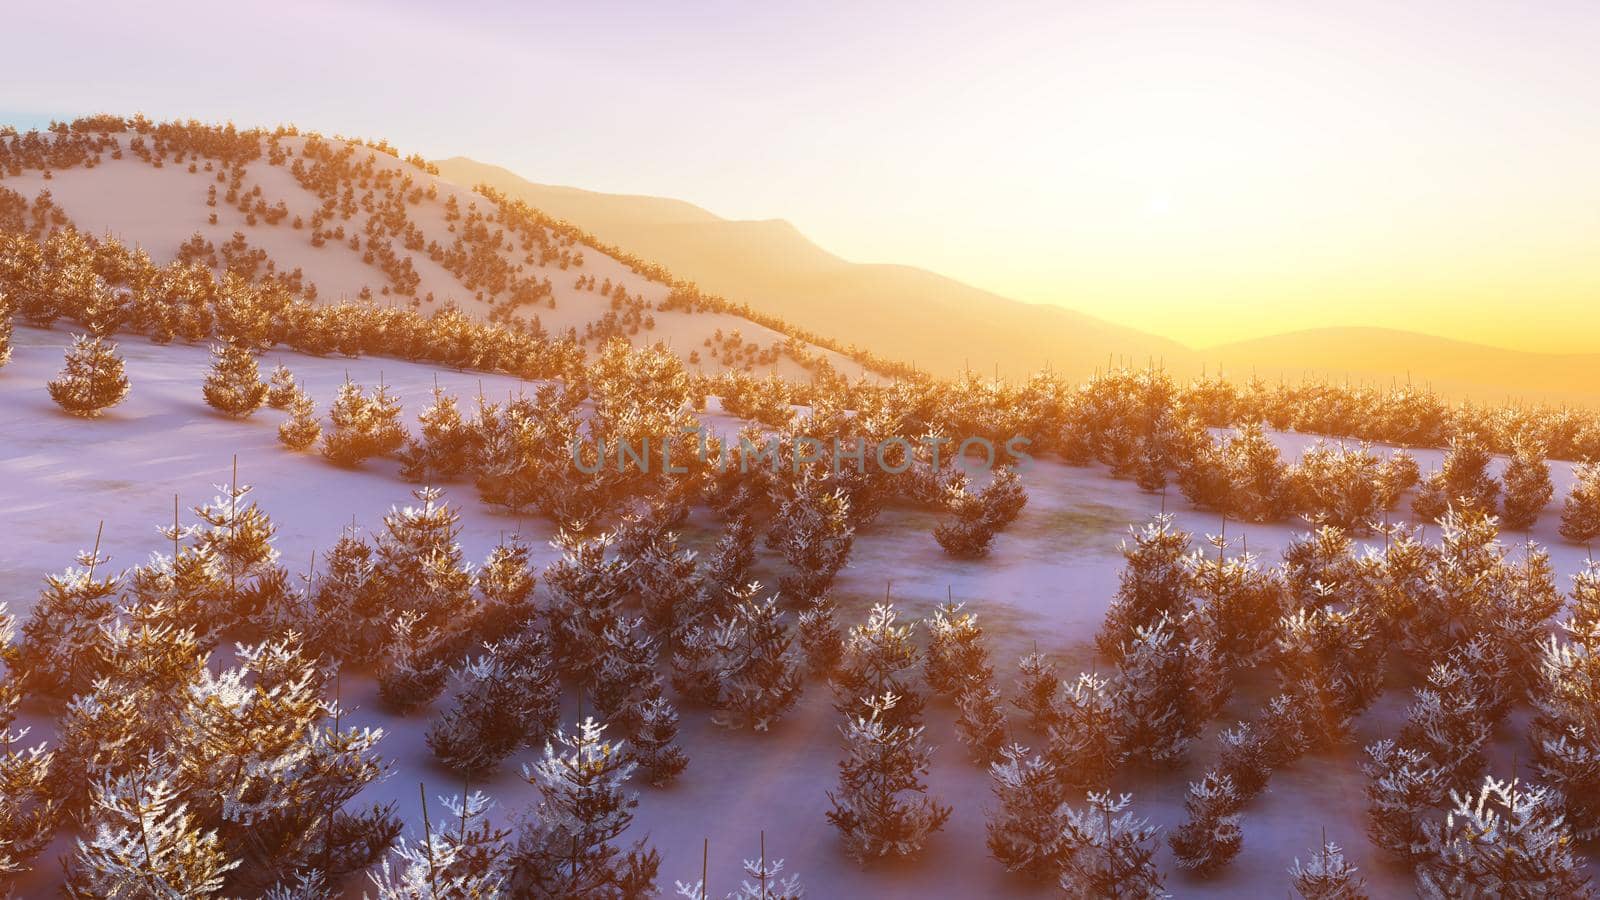 above winter forest mountain sunset 3D rendering illustration